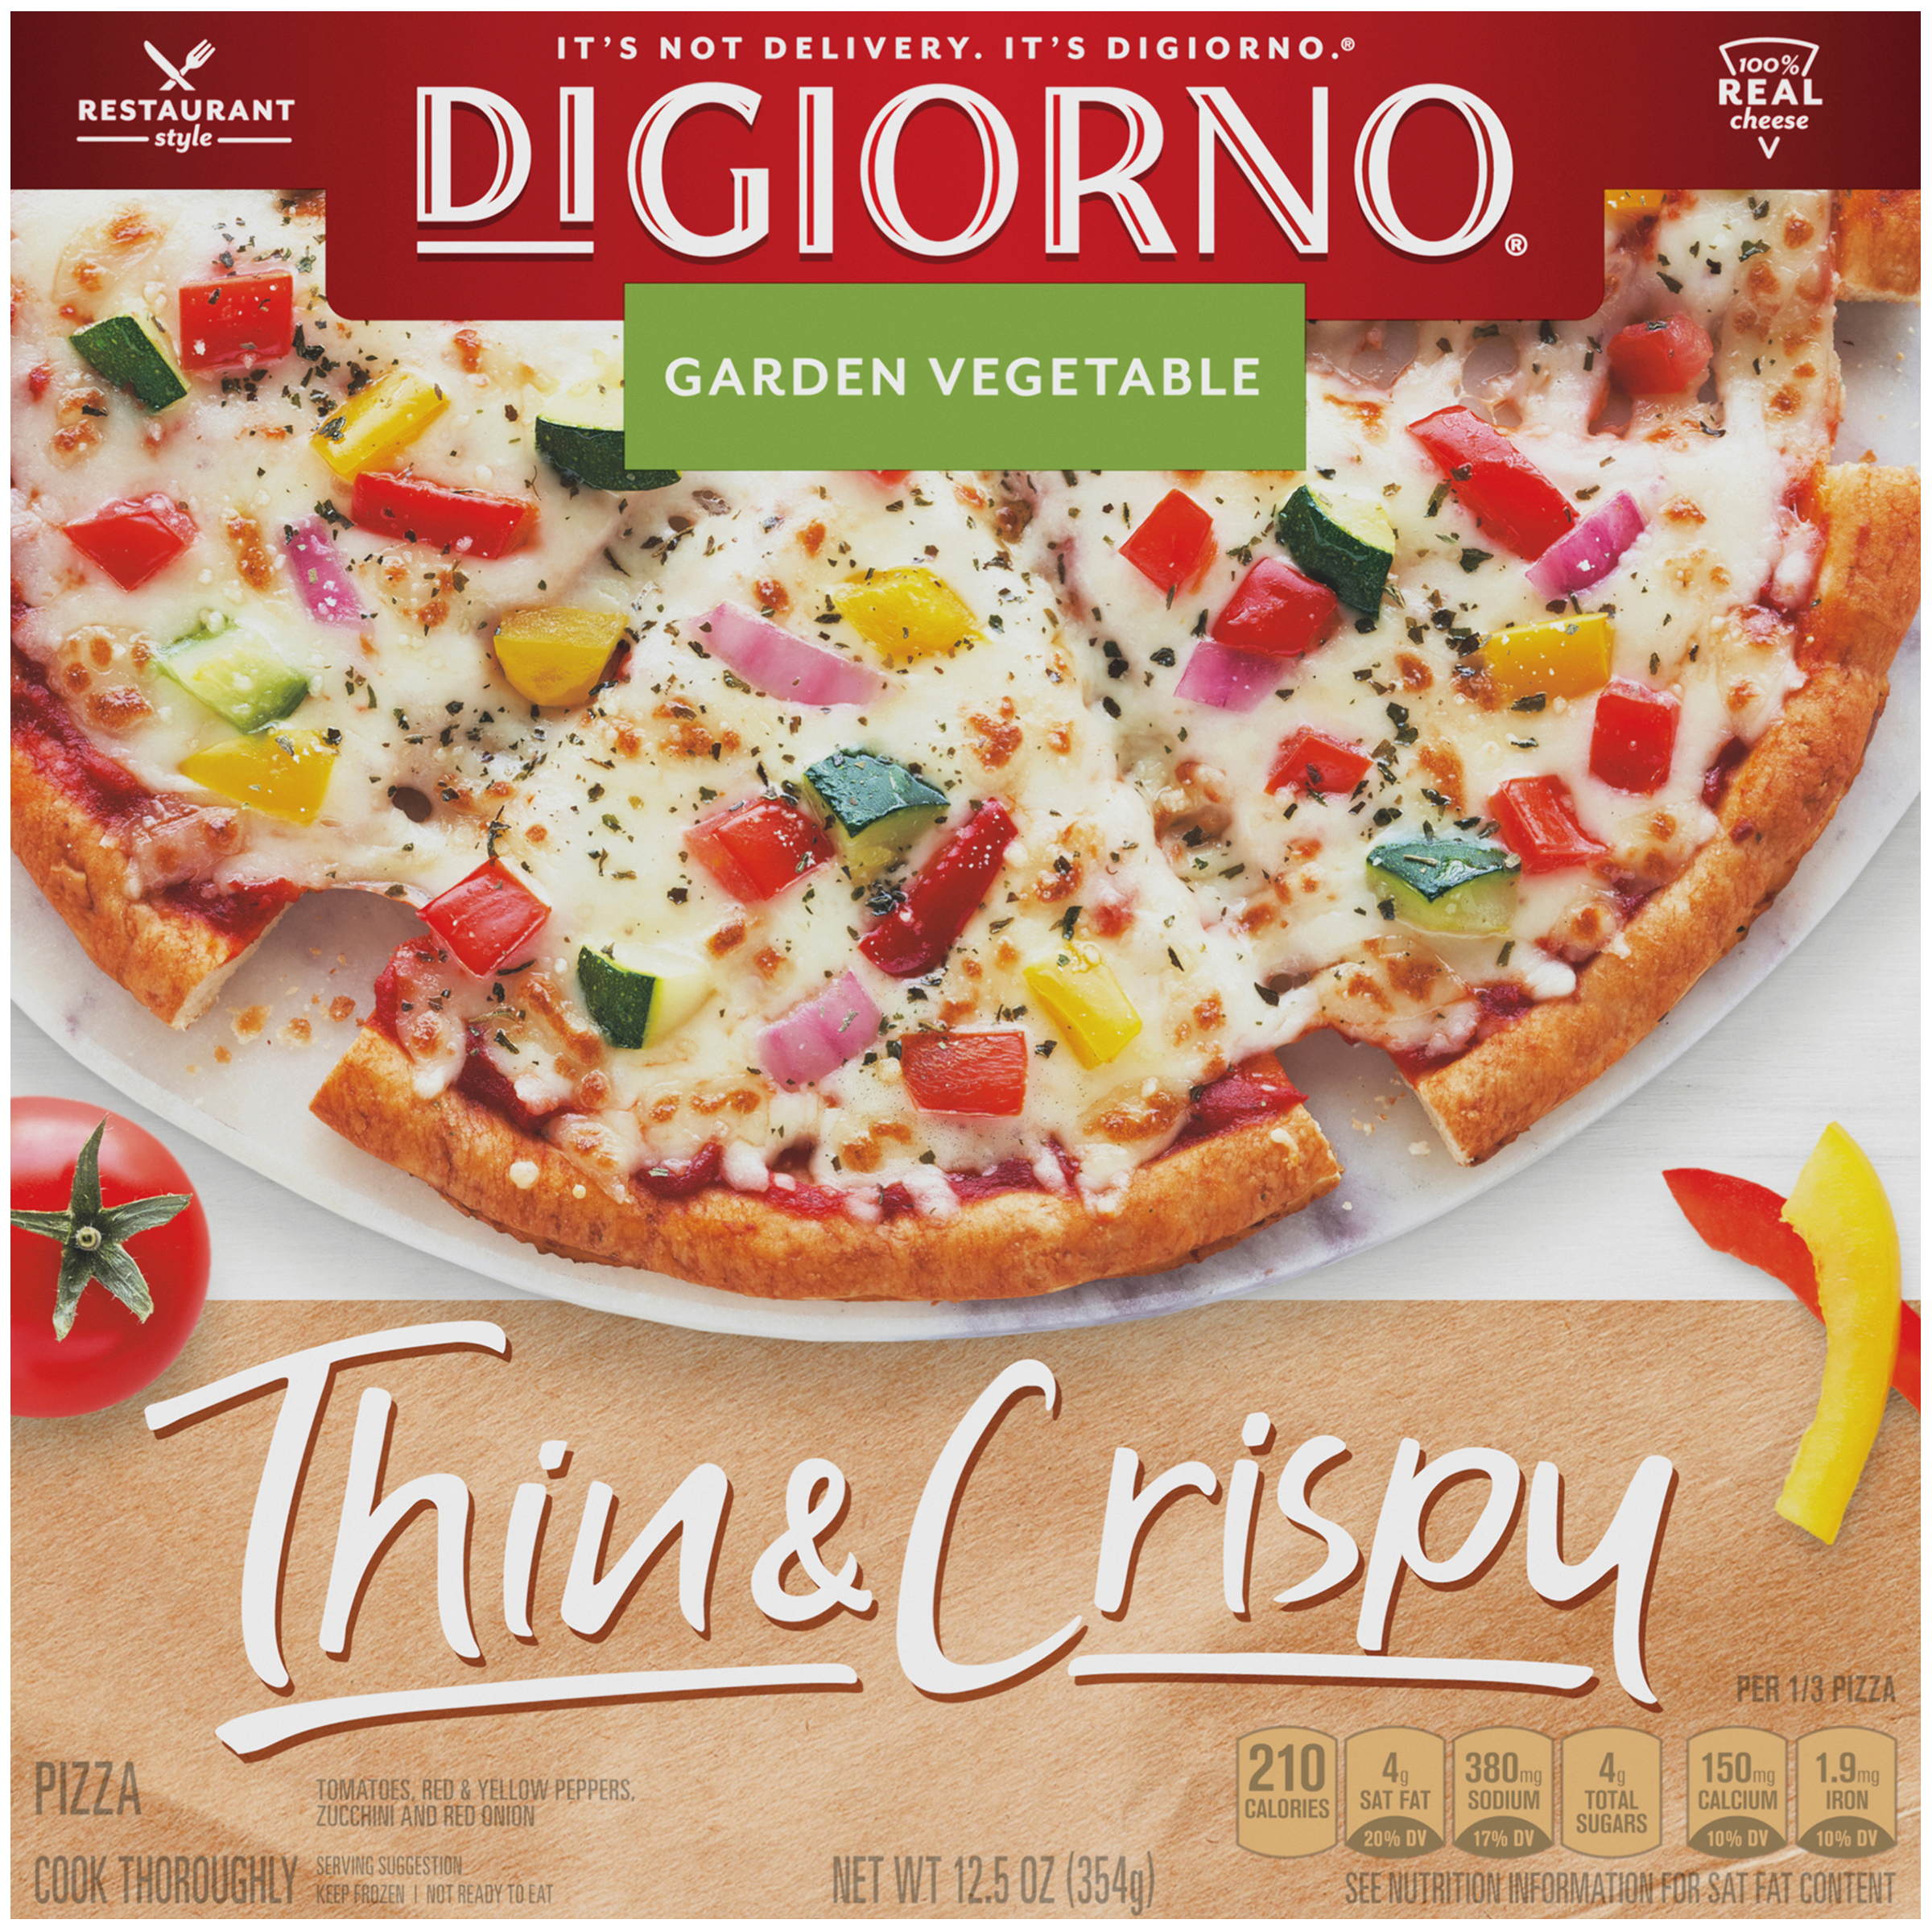 DIGIORNO Thin & Crispy Garden Vegetable Frozen Pizza - image 1 of 13